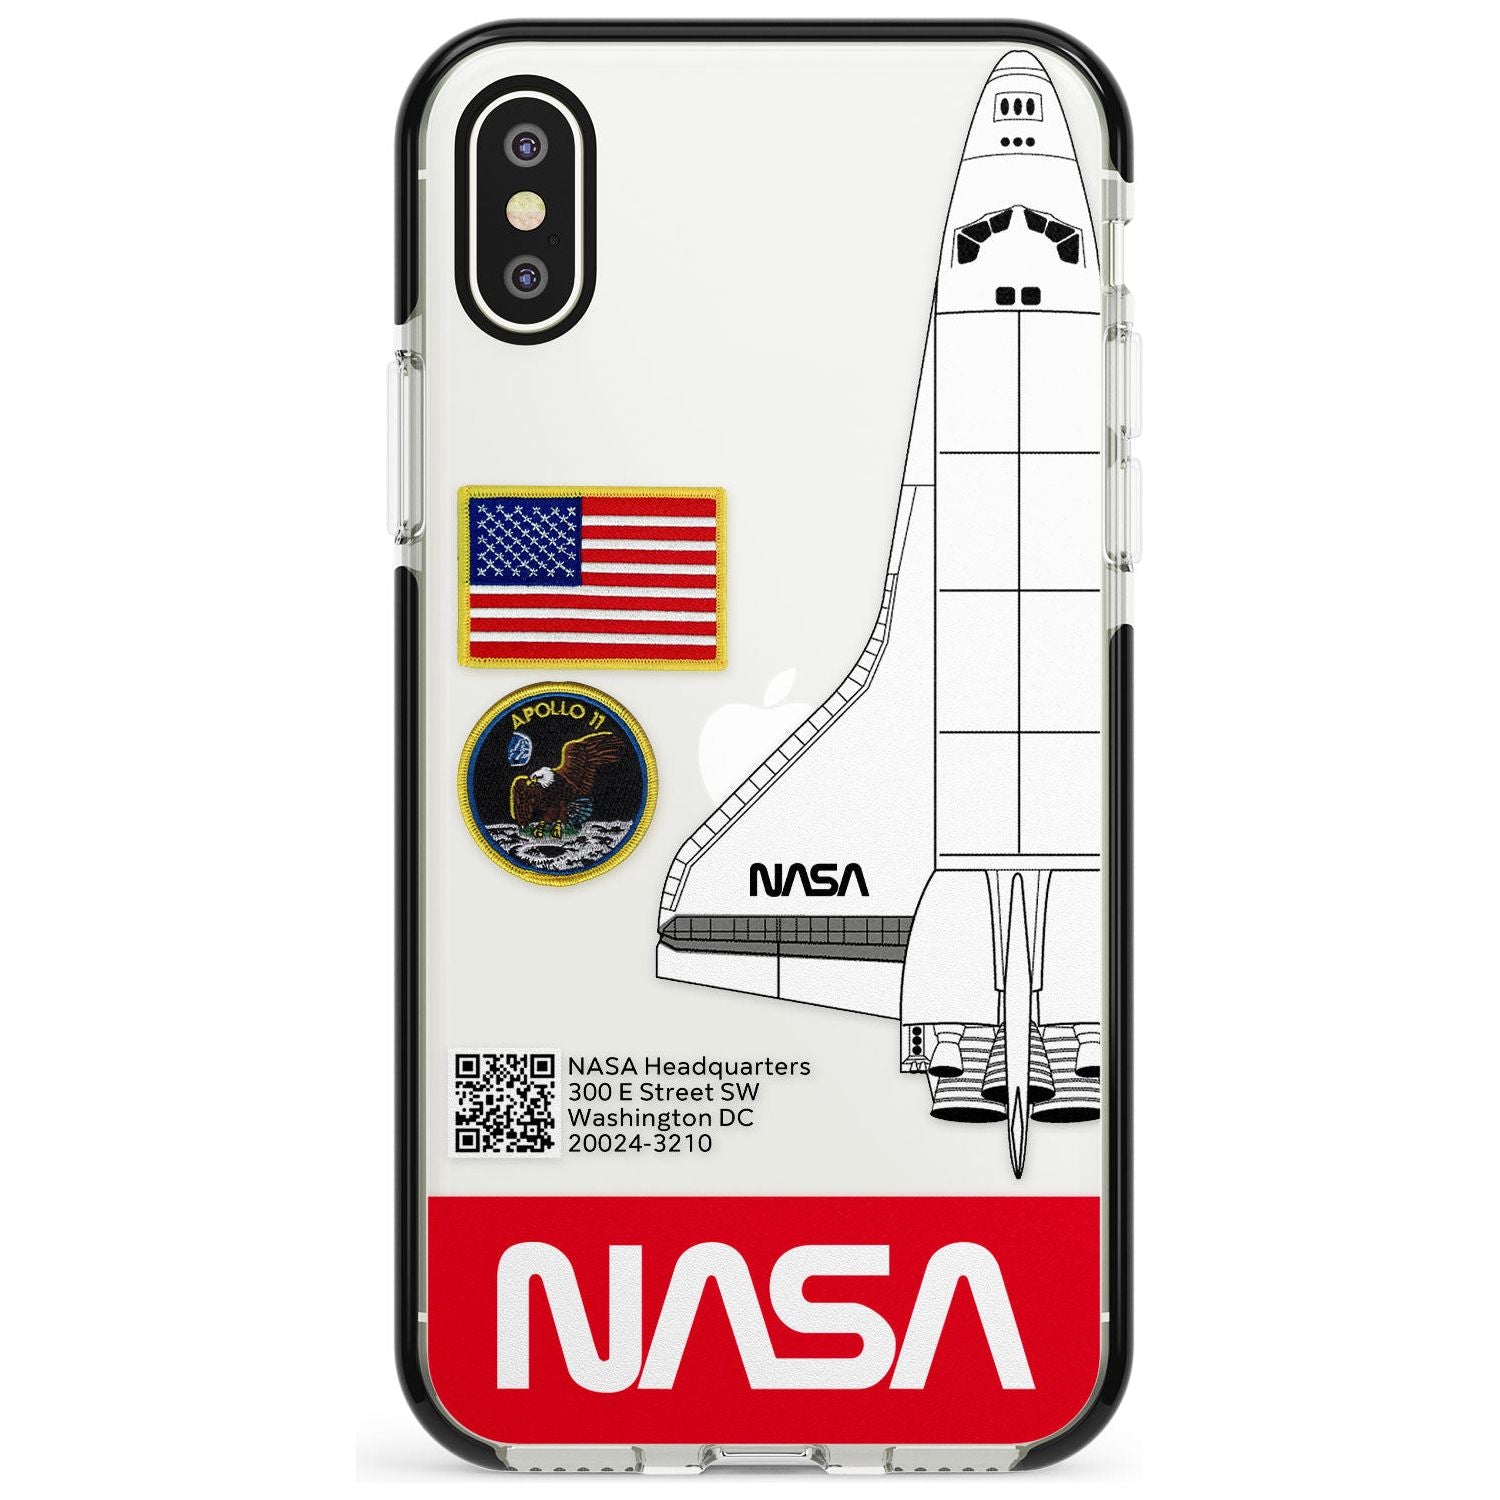 NASA Apollo 11 Black Impact Phone Case for iPhone X XS Max XR